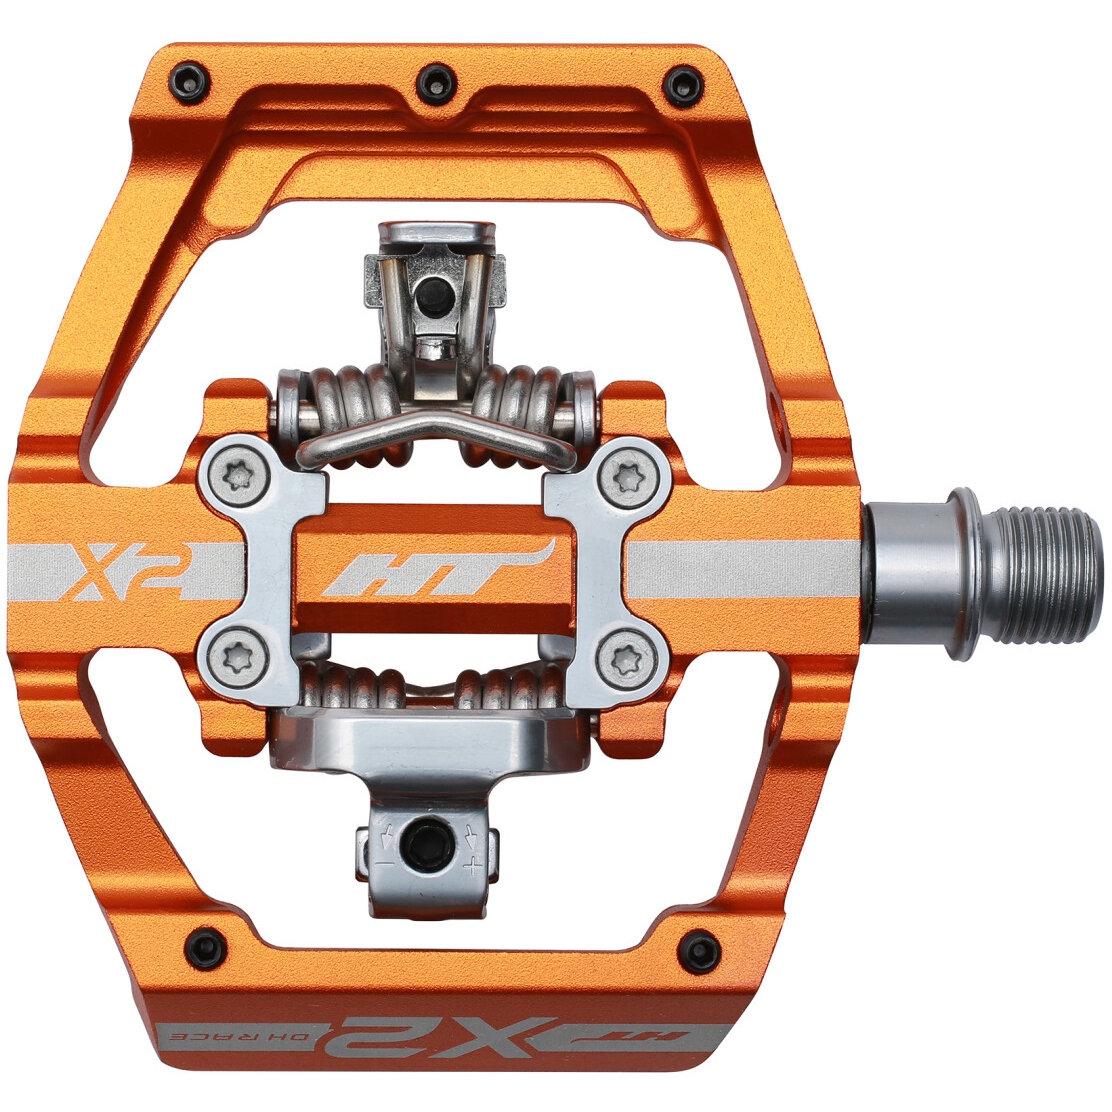 Productfoto van HT X2 Klikpedalen Aluminium - oranje